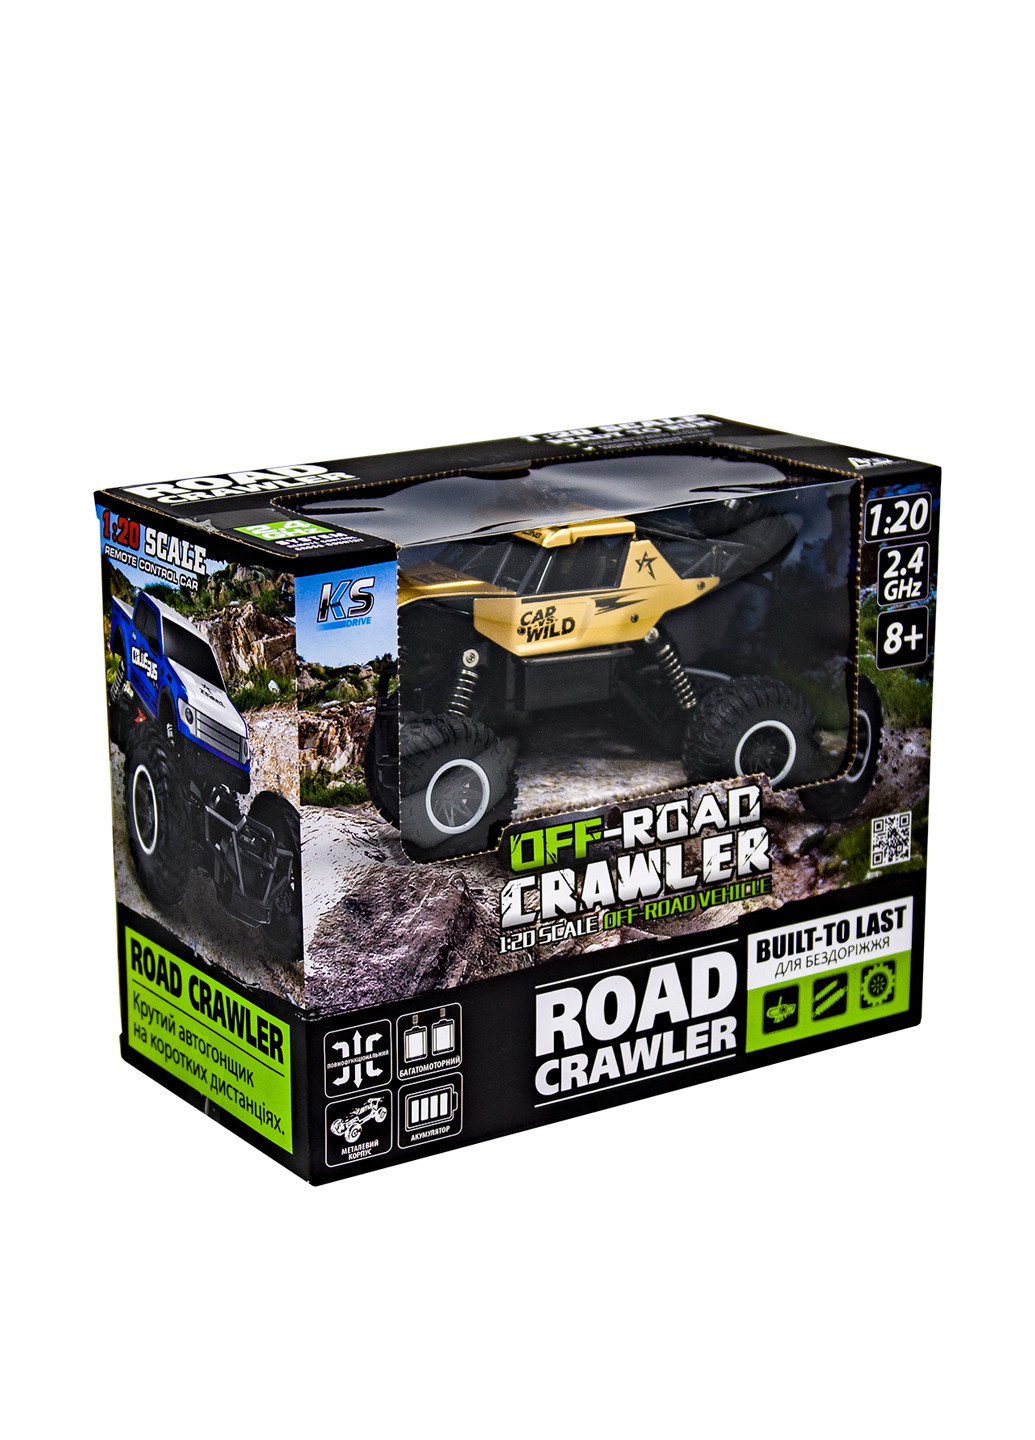 Автомобіль OFF-ROAD CRAWLER на р/к - CAR VS WILD 3,6V, 1:20 Sulong Toys (157723464)